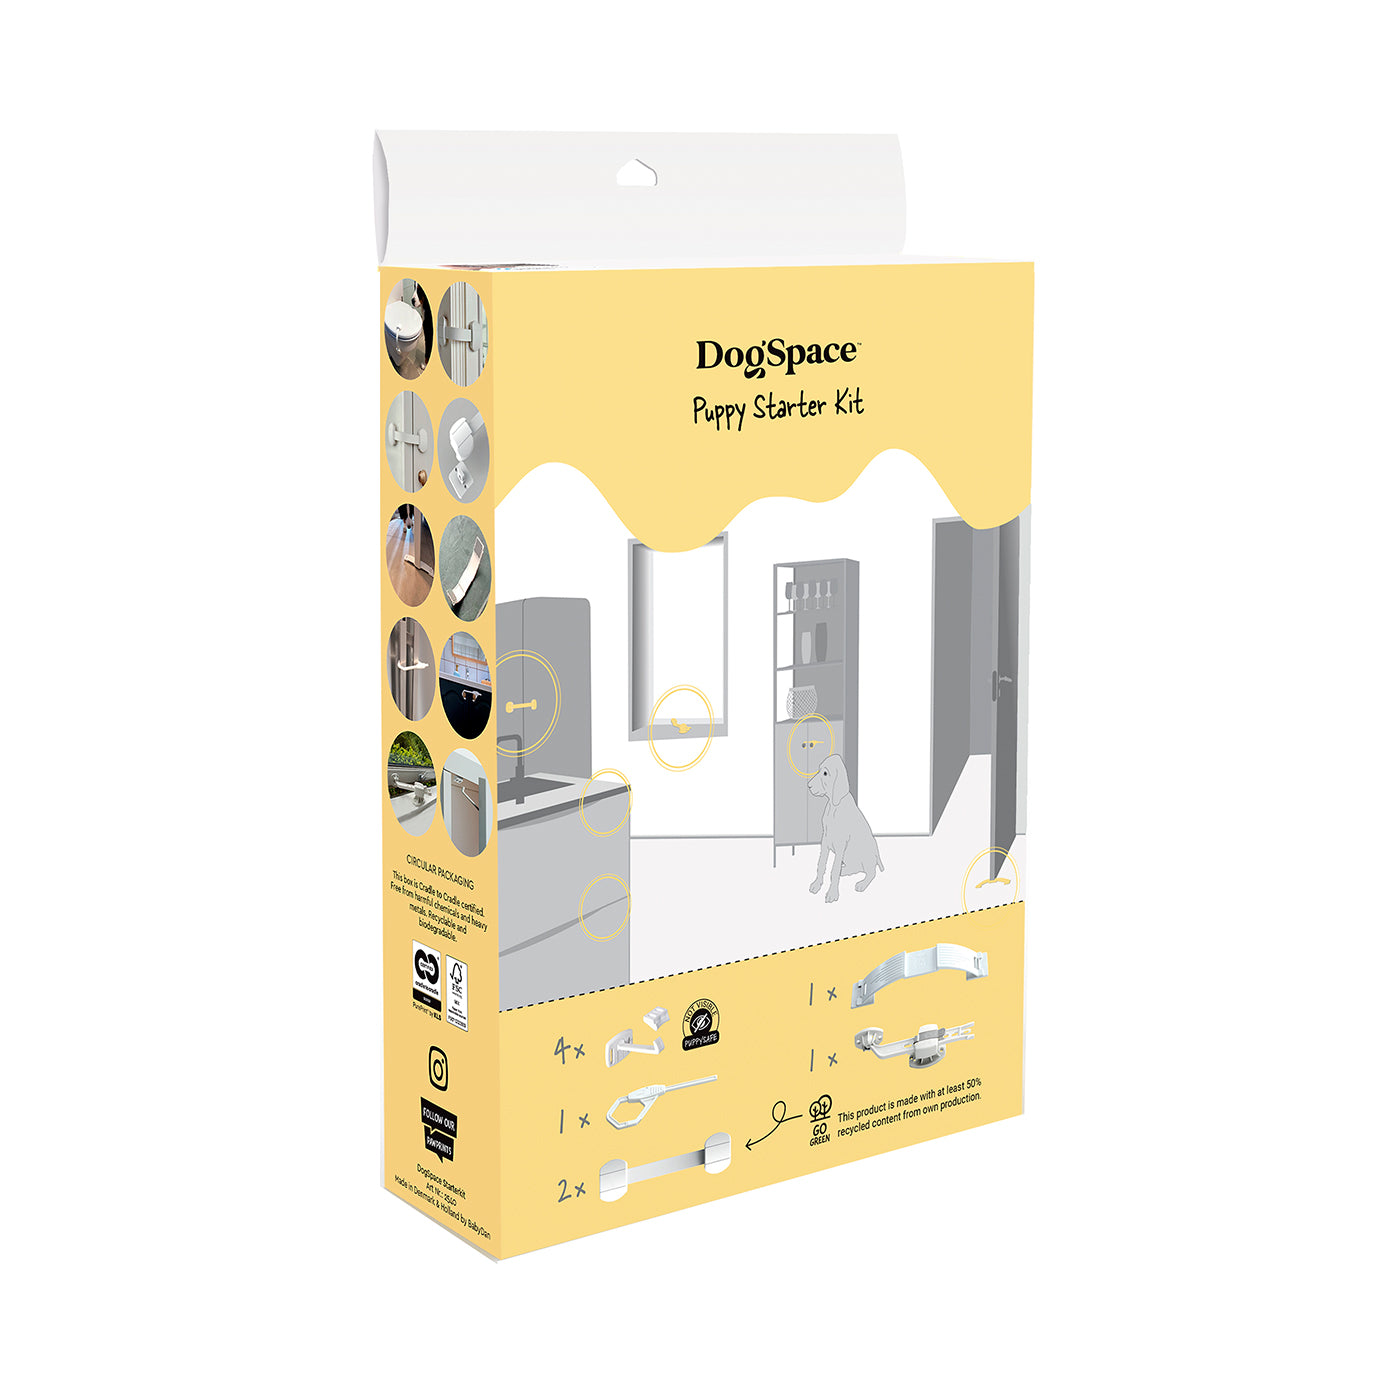 DogSpace Puppy Starter Kit